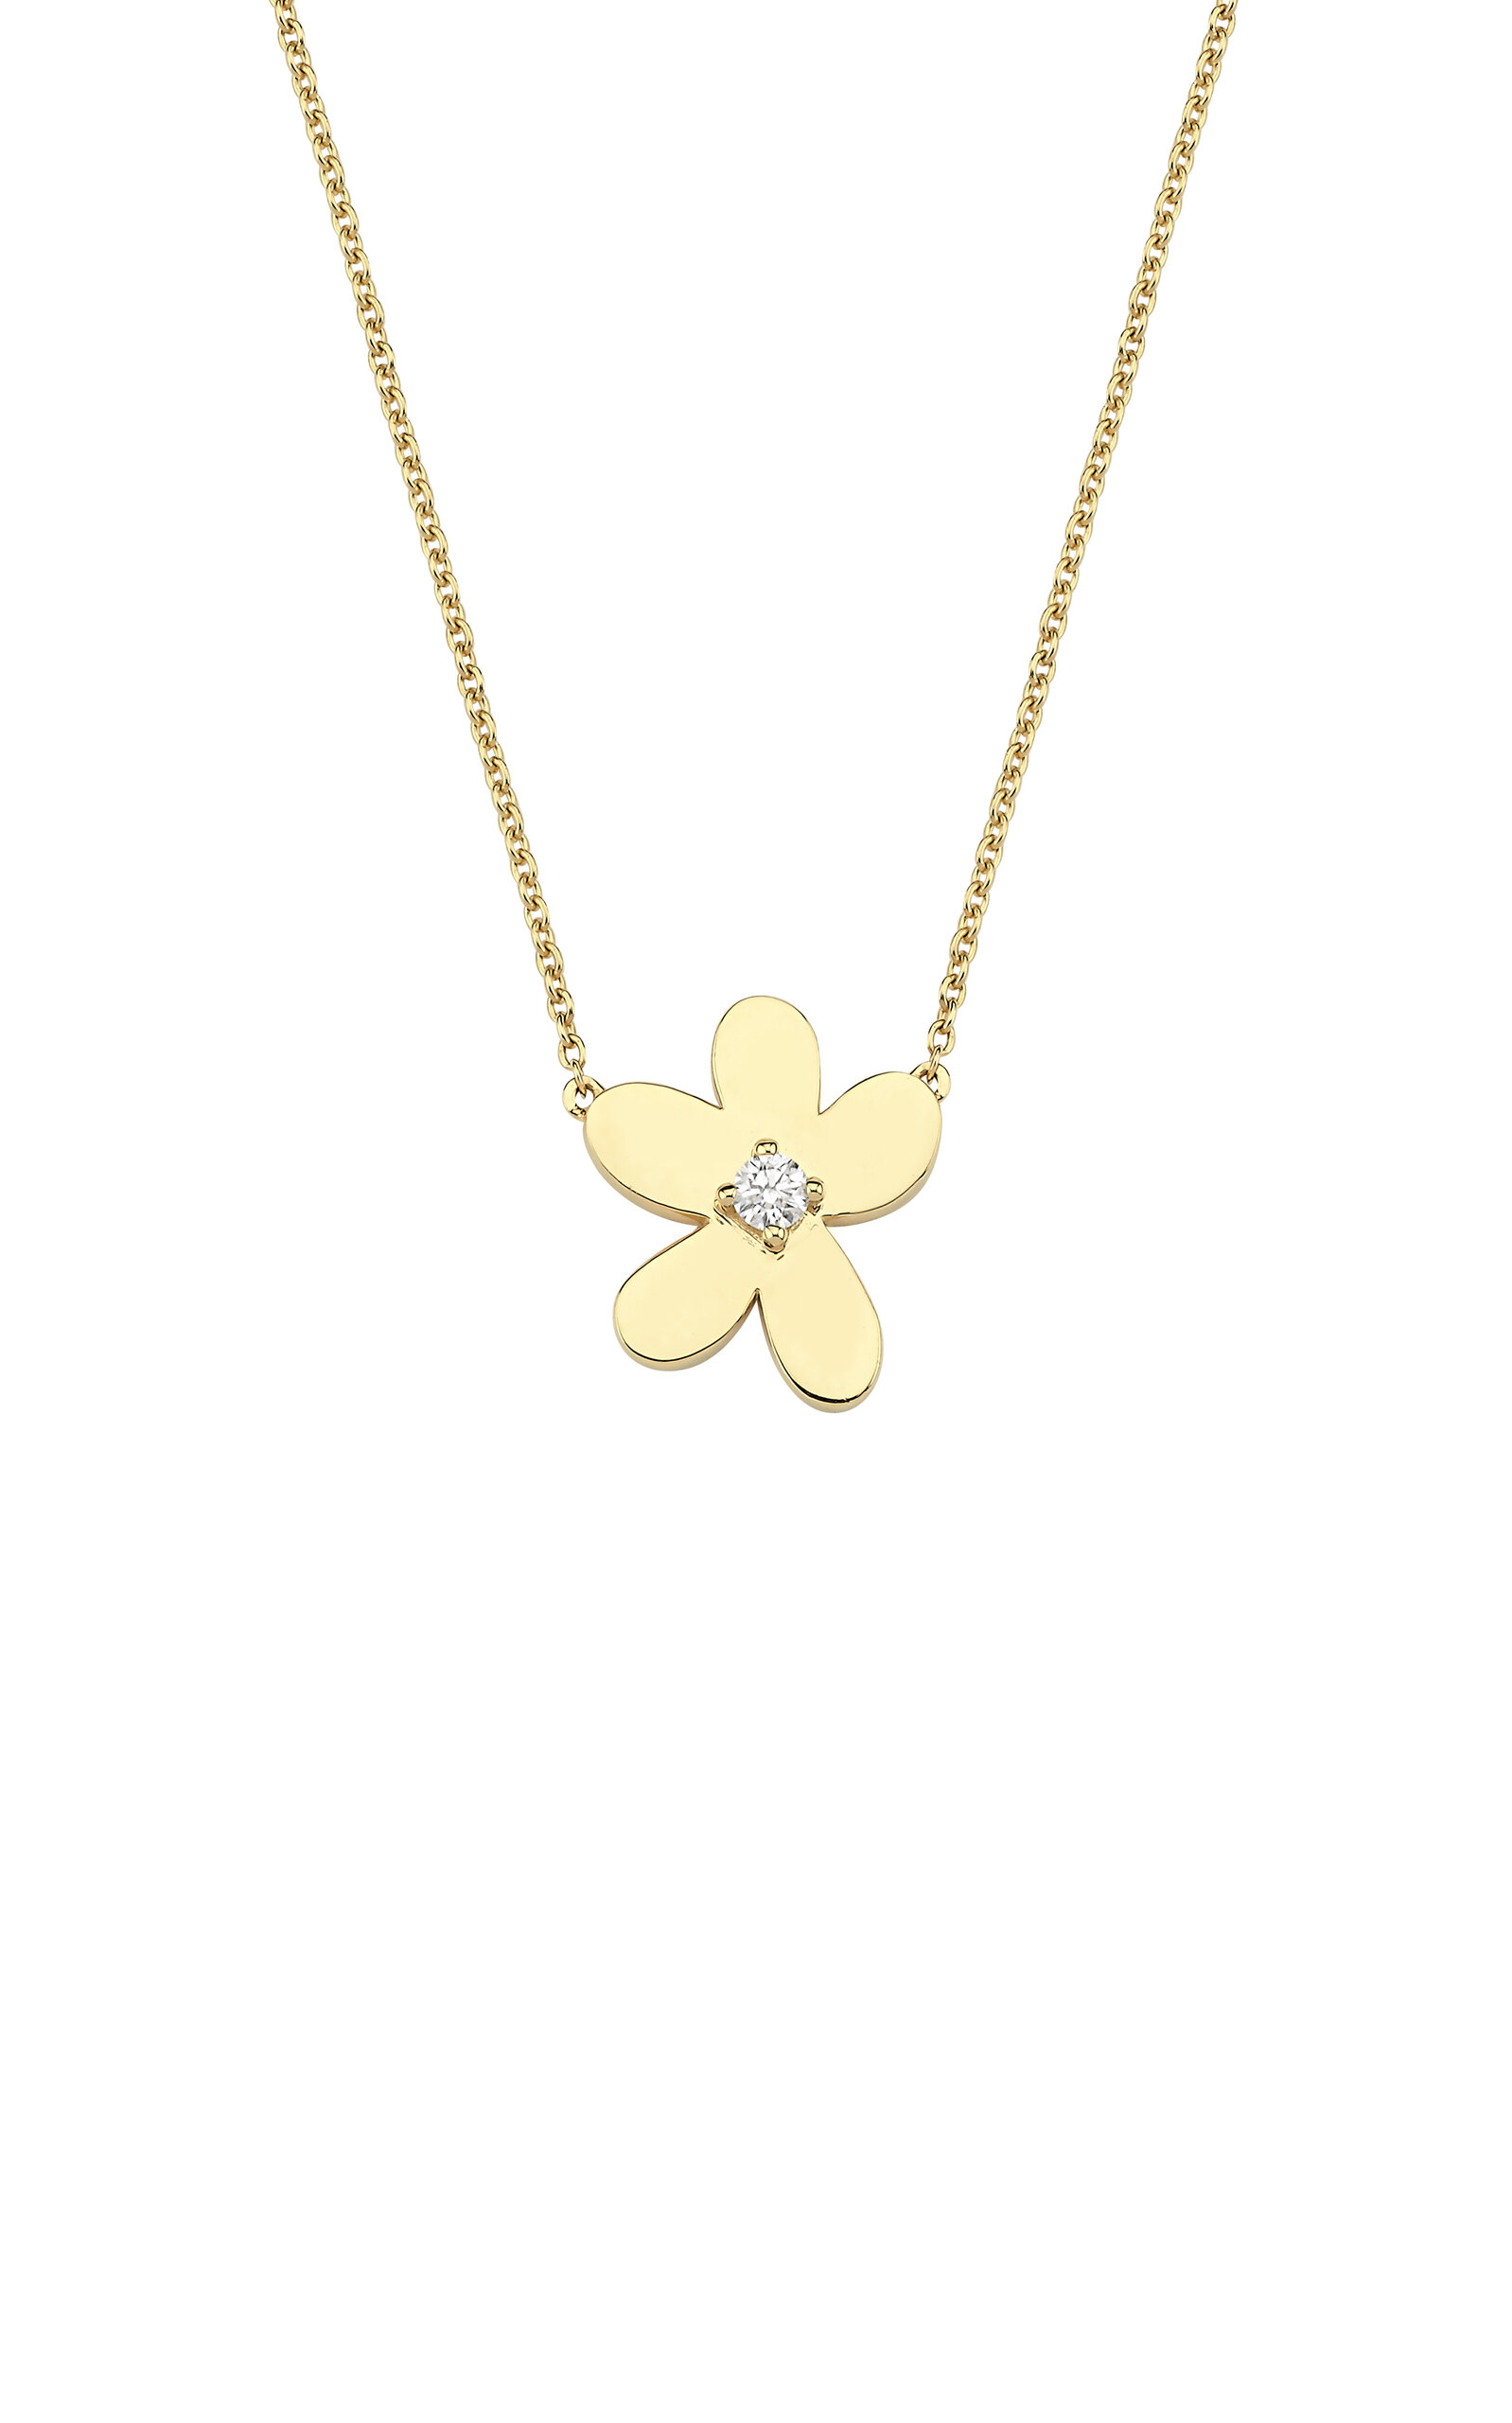 Charms Company Women's 14K Yellow Gold Diamond Necklace